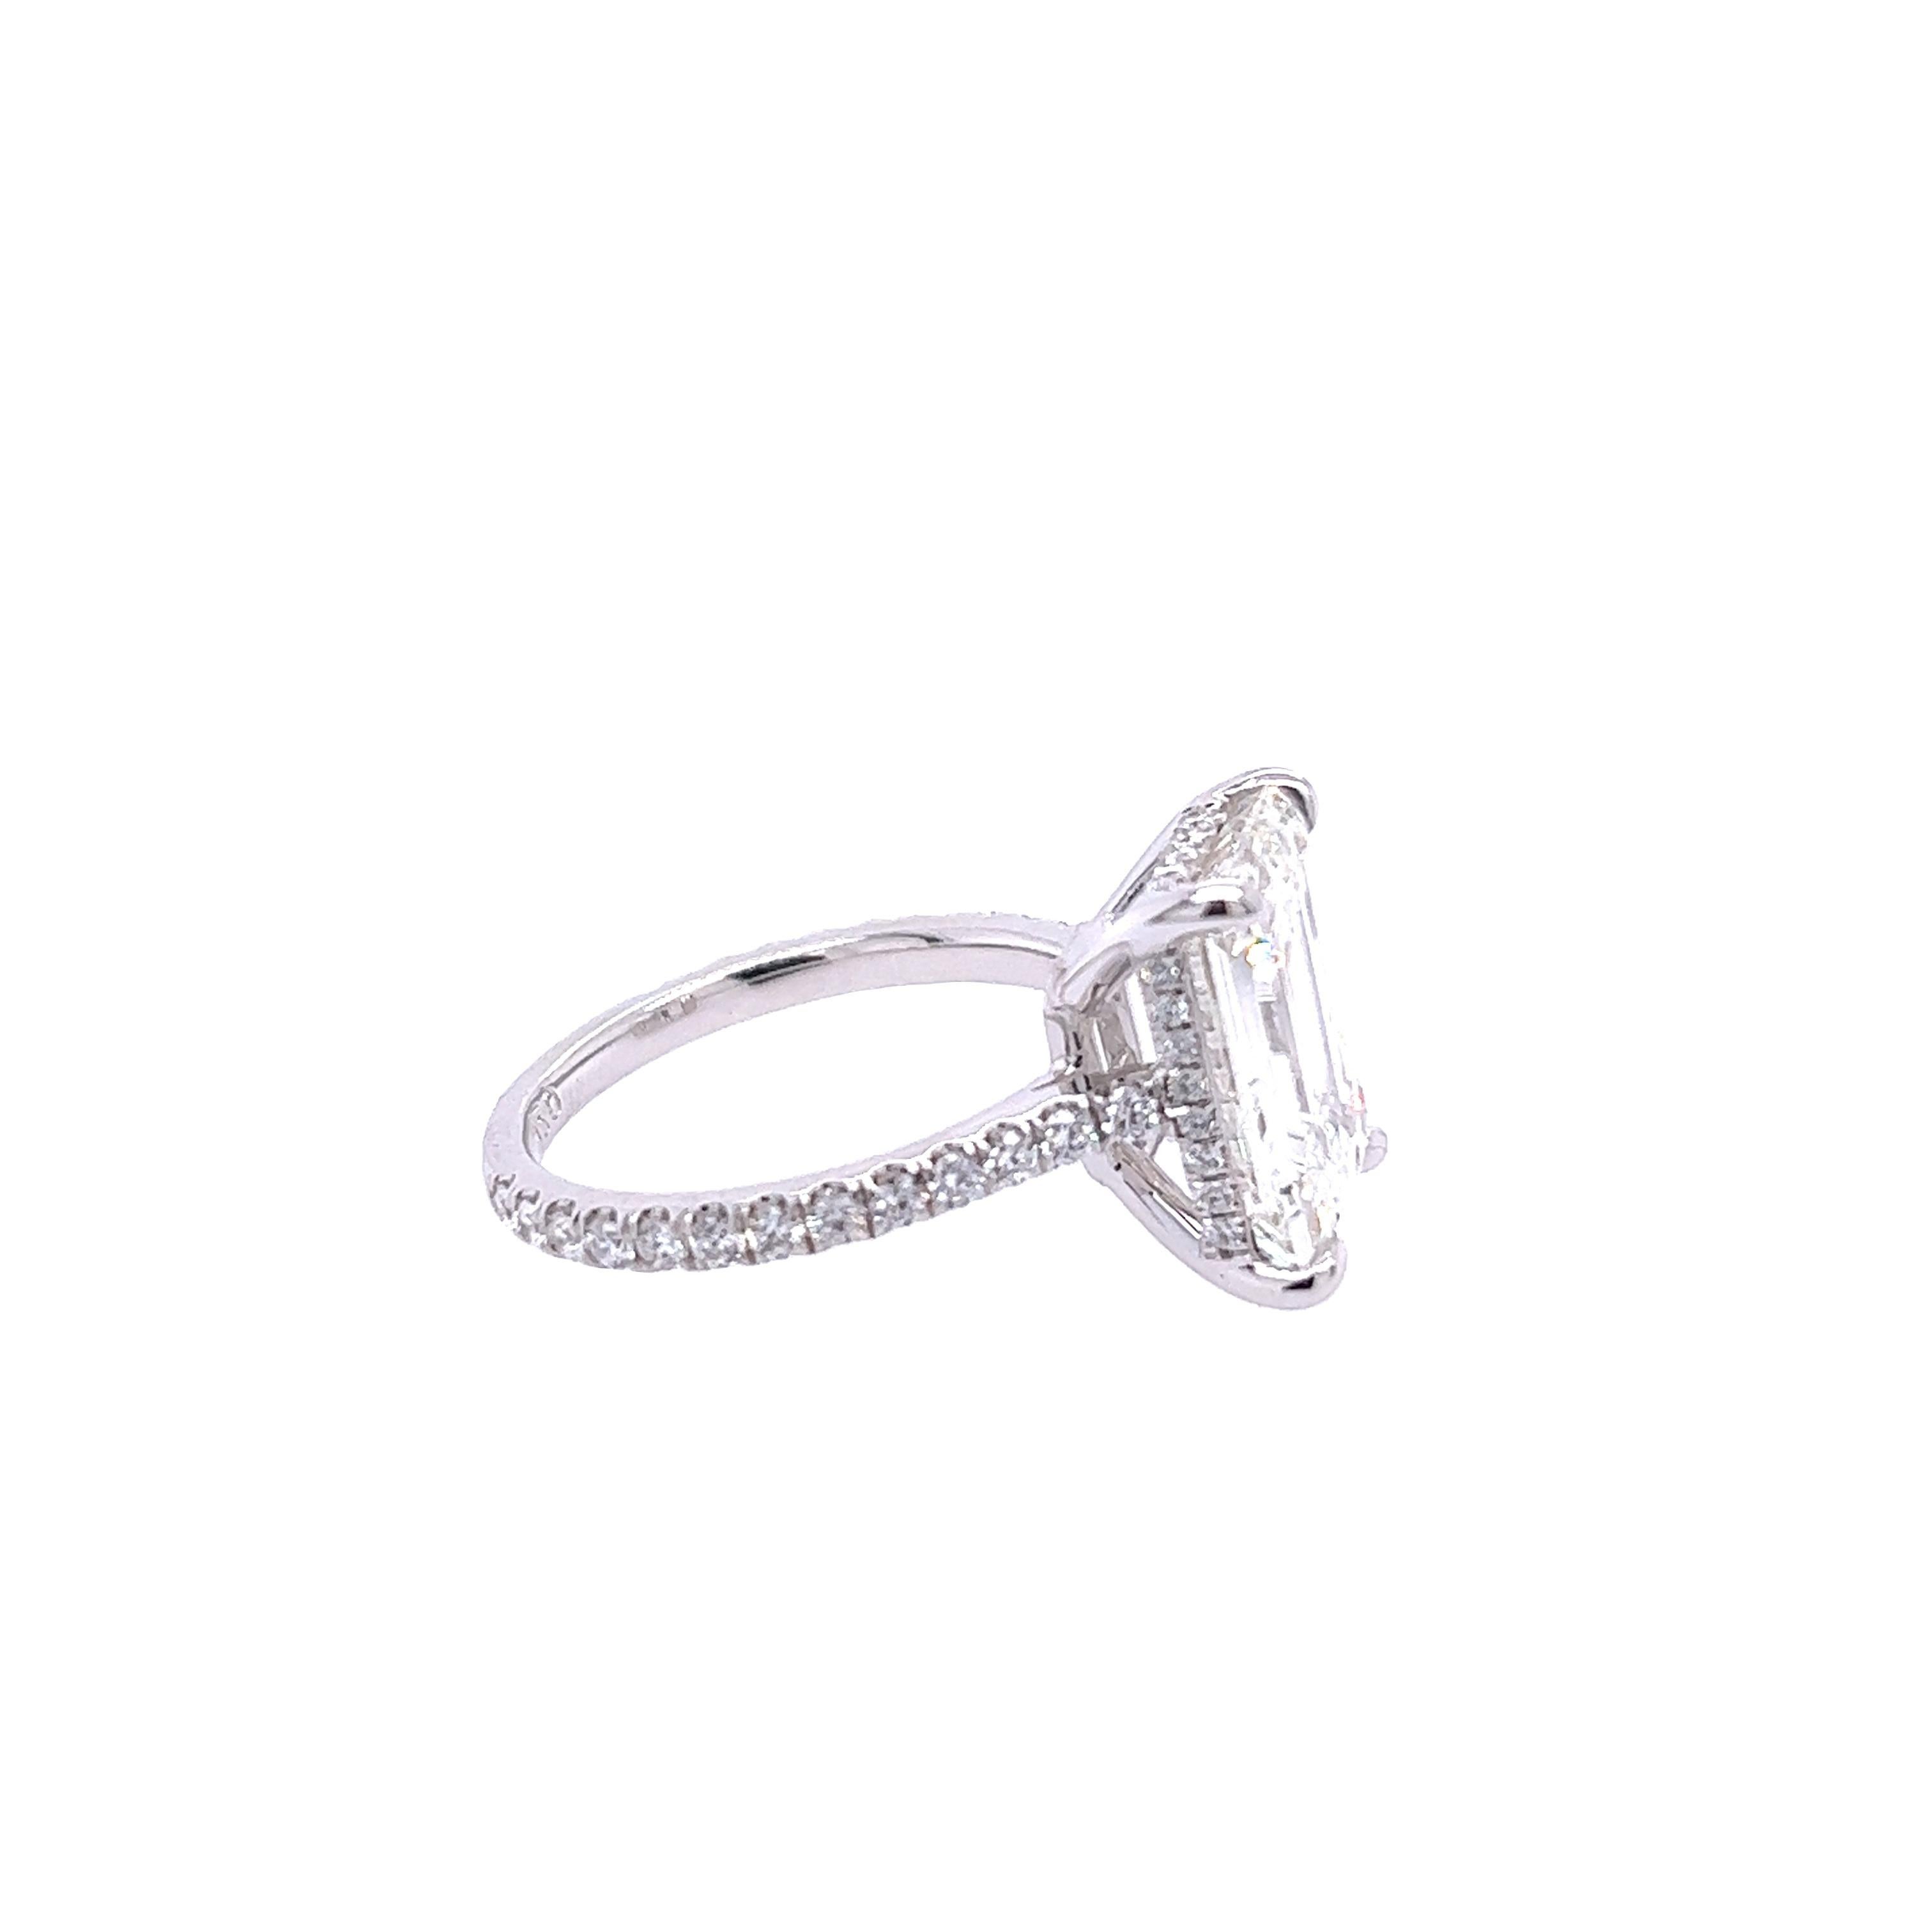 David Rosenberg 6.02 Carat Emerald Cut I VS1 GIA Diamond Engagement Ring 1